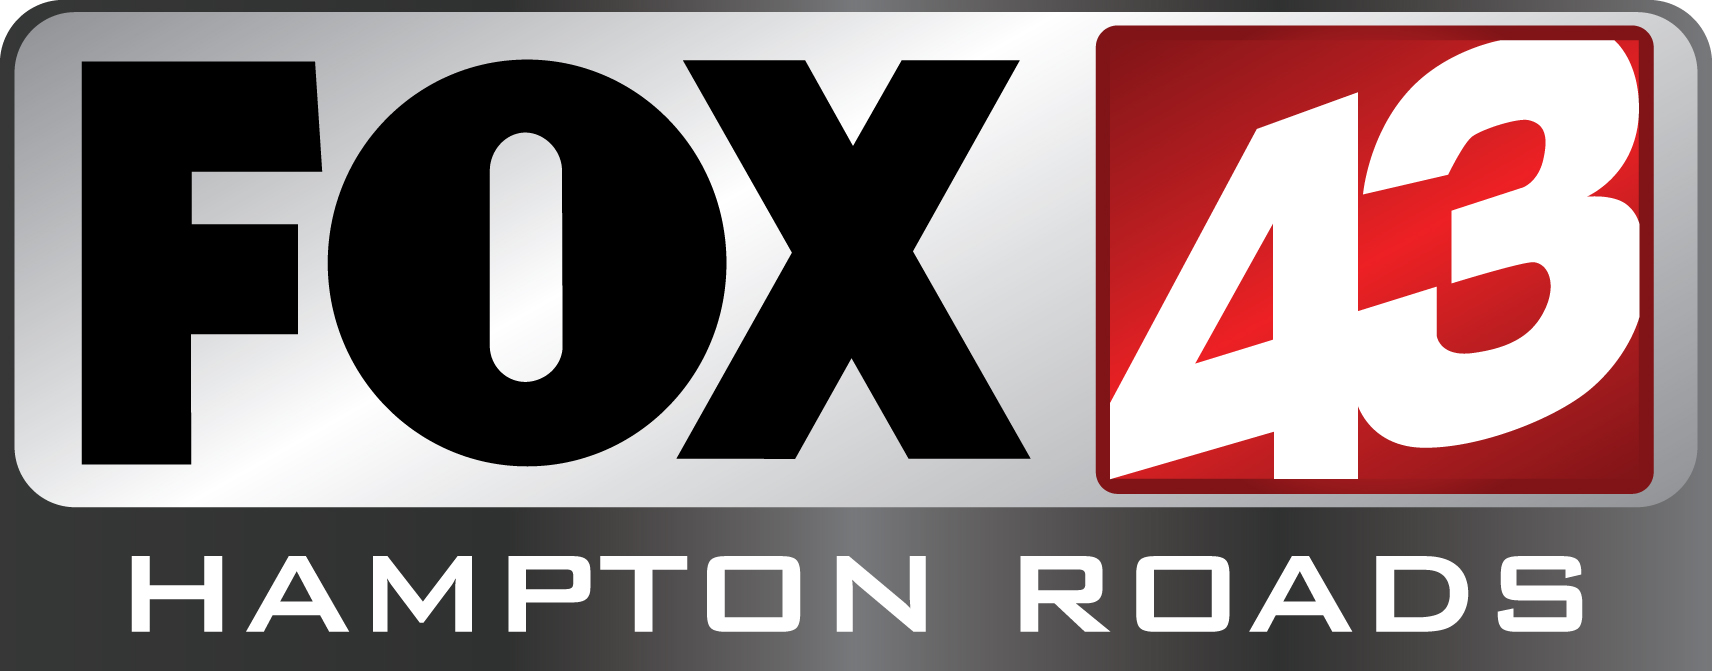 Fox 43 Hampton Roads Logo